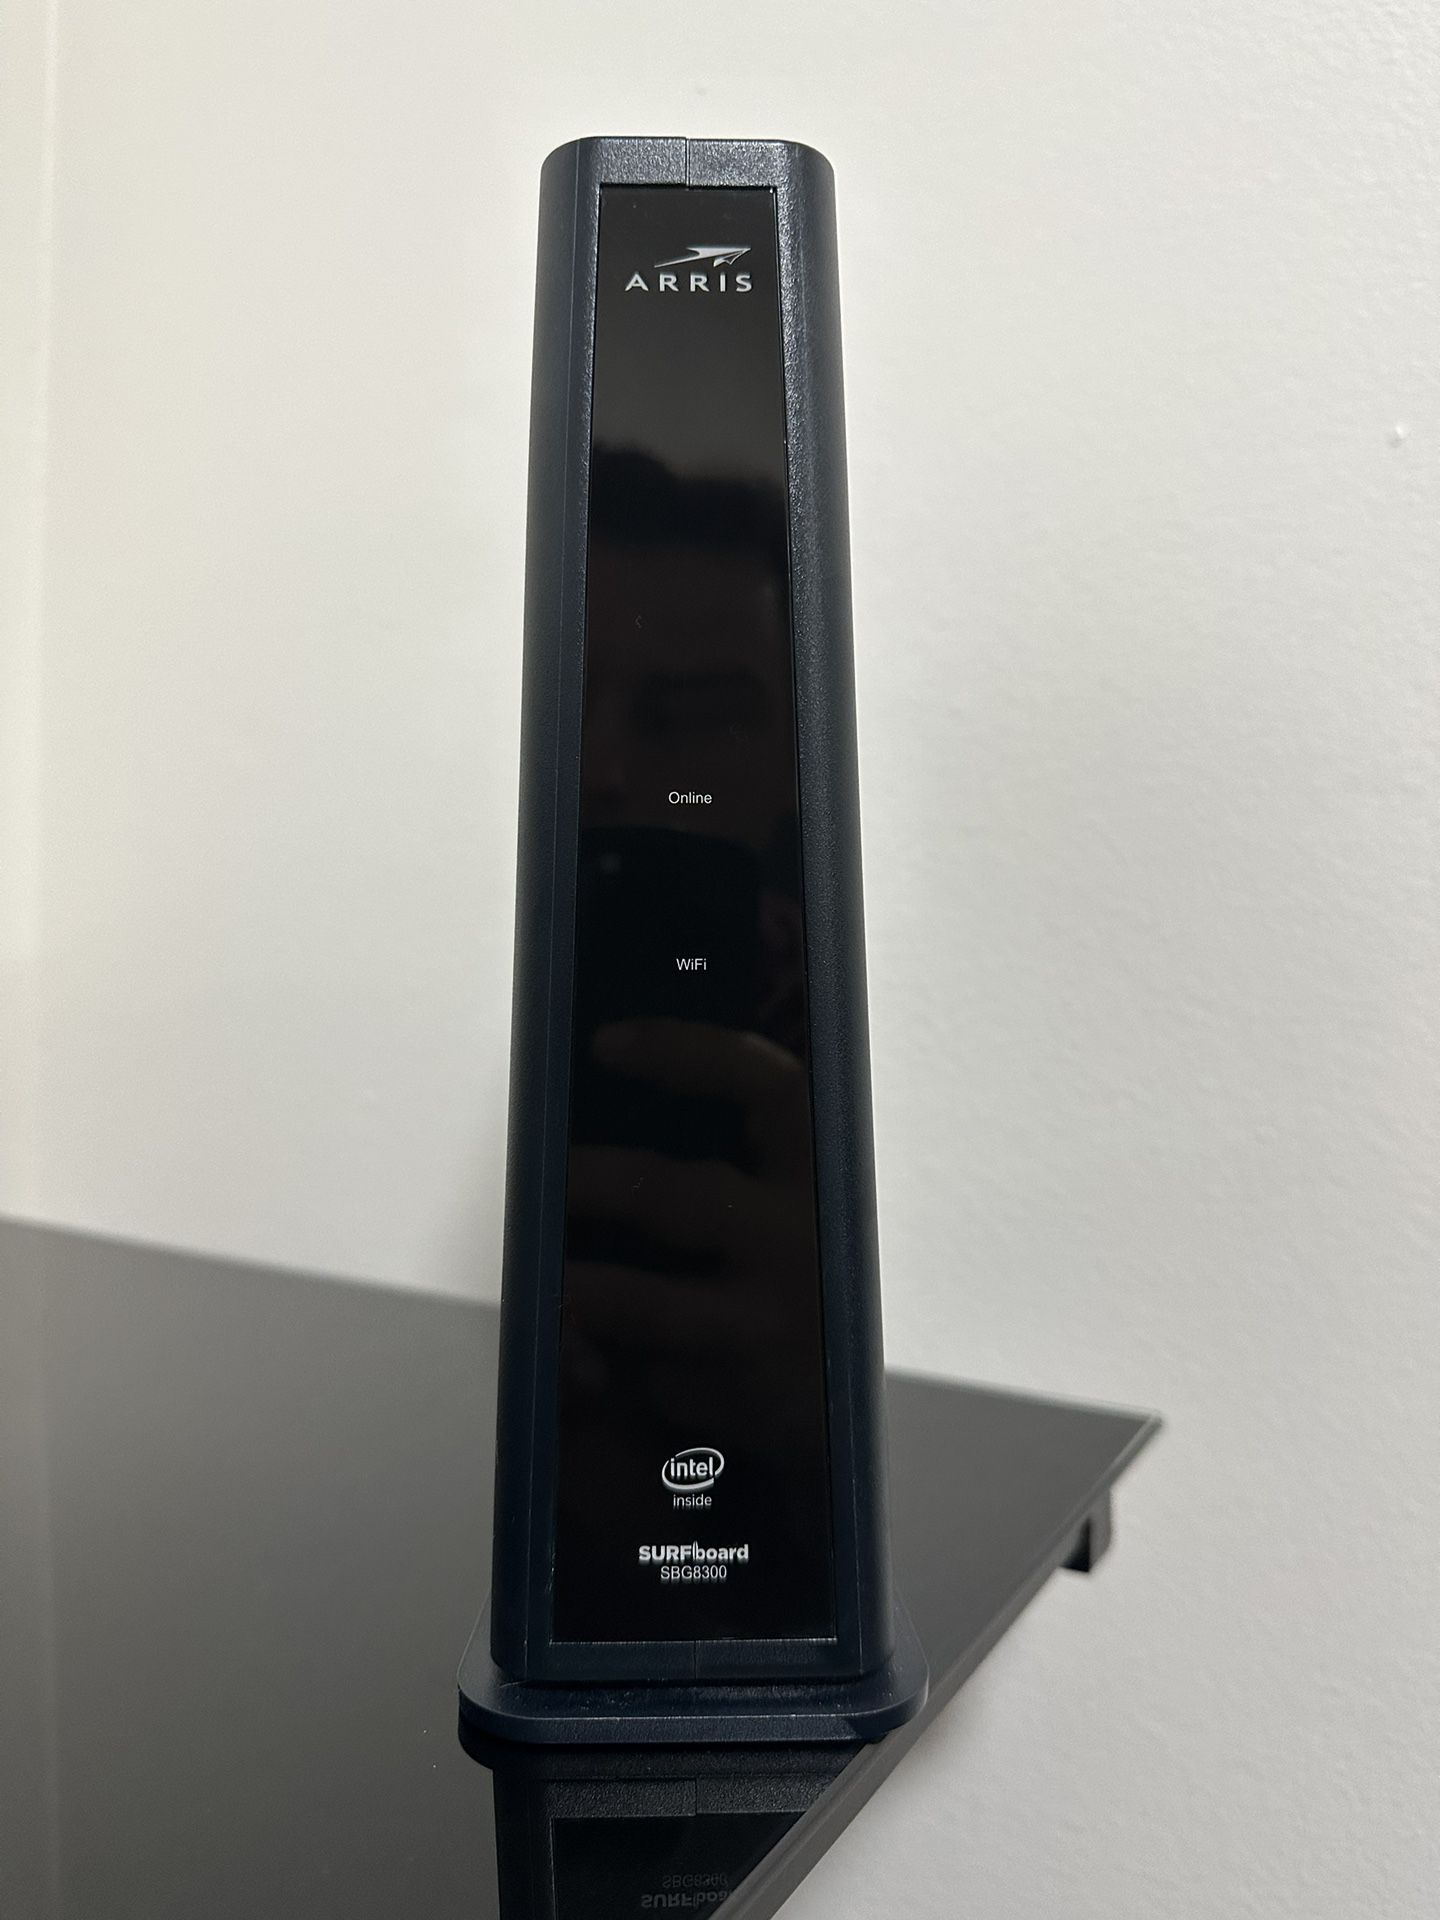 Modem Router Arris Model SBG8300